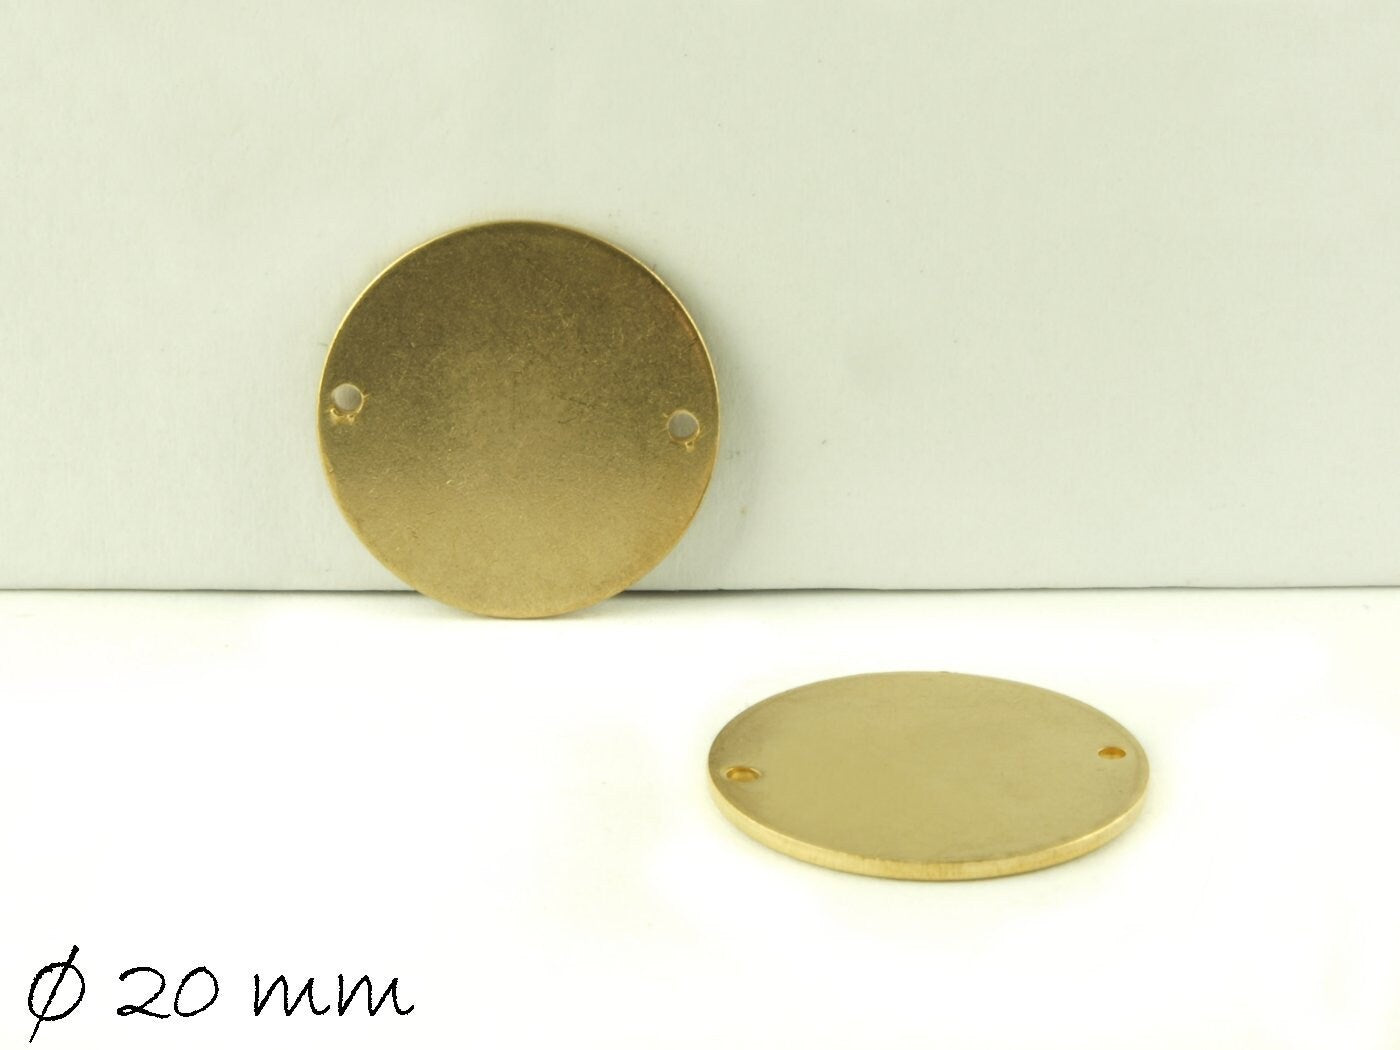 4 Stück runde Verbinder Stempel Plättchen Messing gold, Ø 20 mm